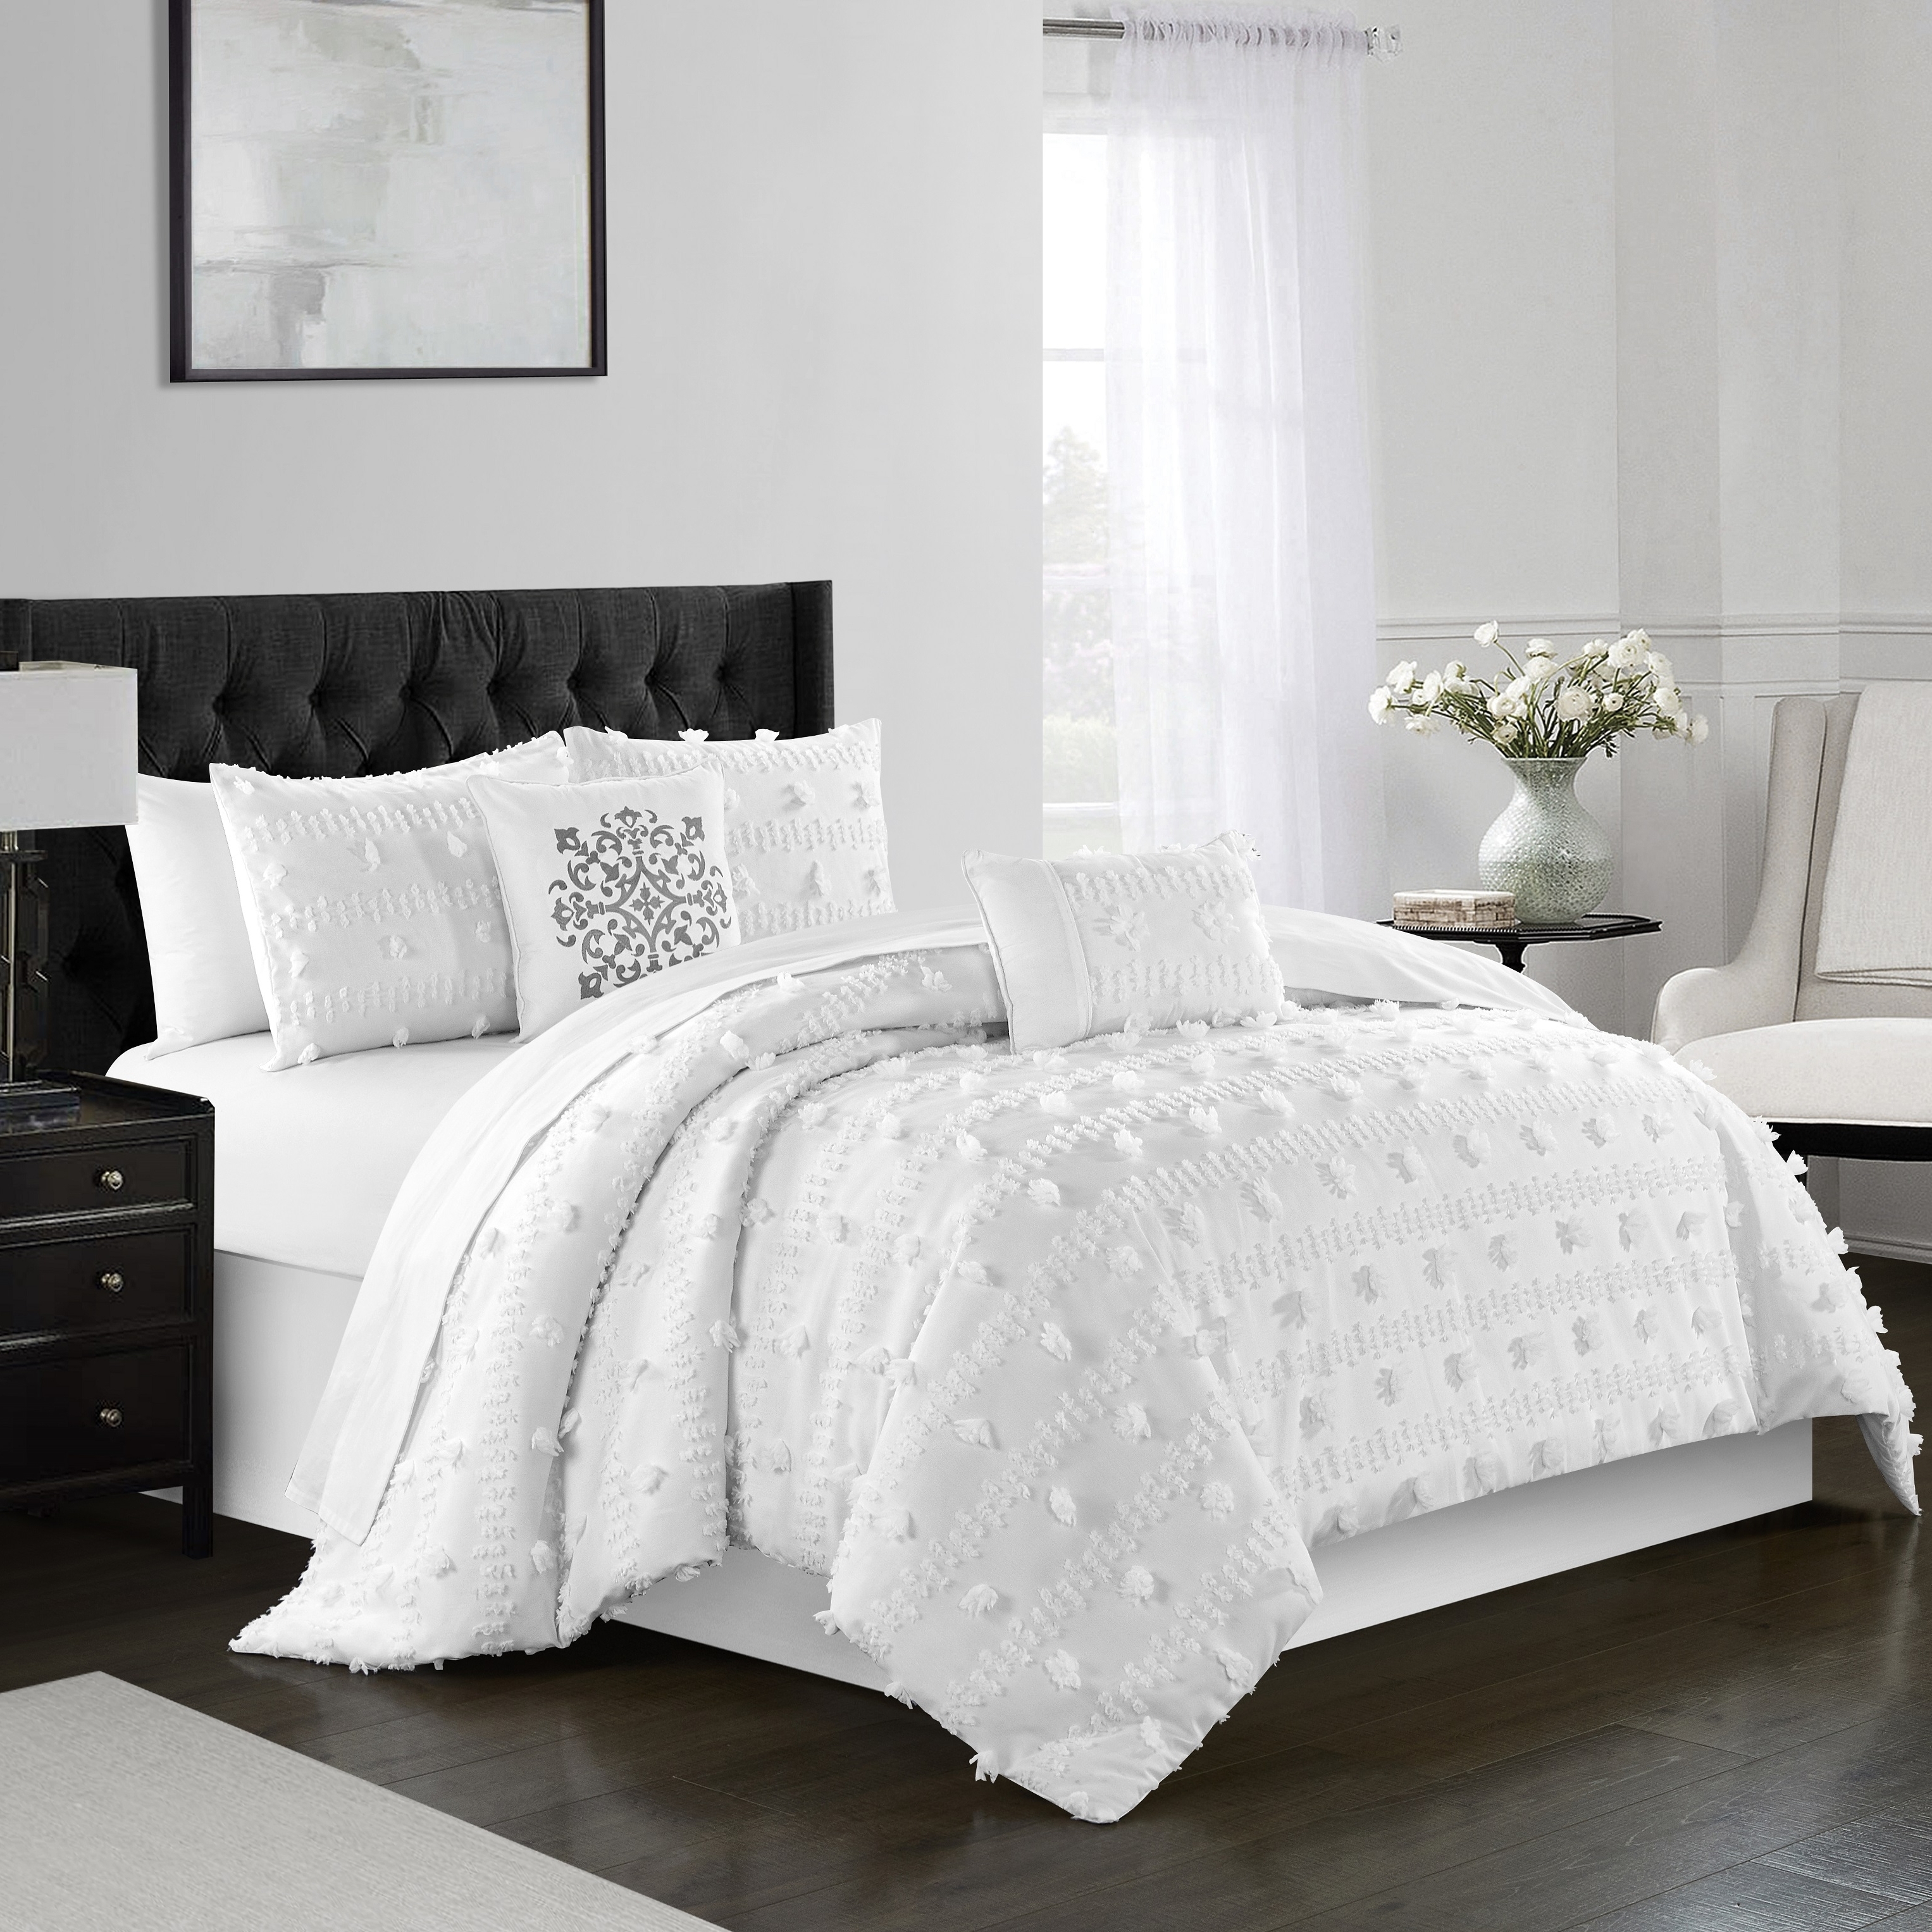 Ahtisa 5 Piece Comforter Set Jacquard Floral Applique Design Bedding - White, King